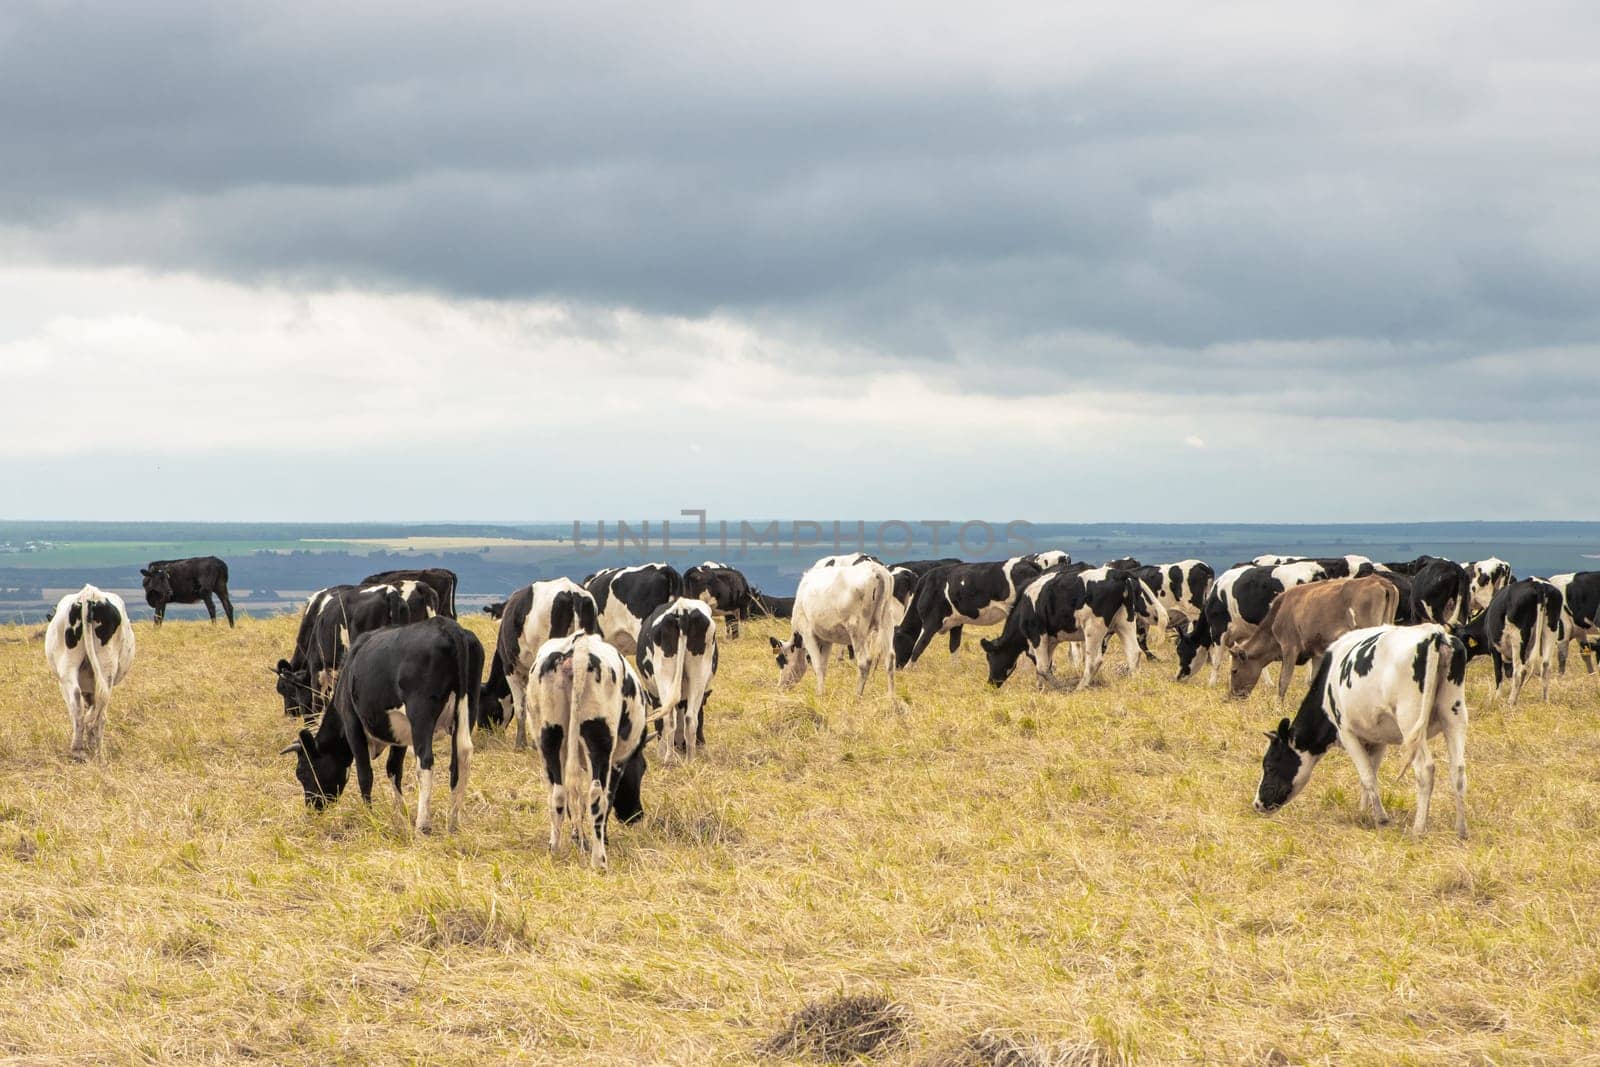 A Serene Scene of Grazing Cattle on a Golden Grass Field by Studia72